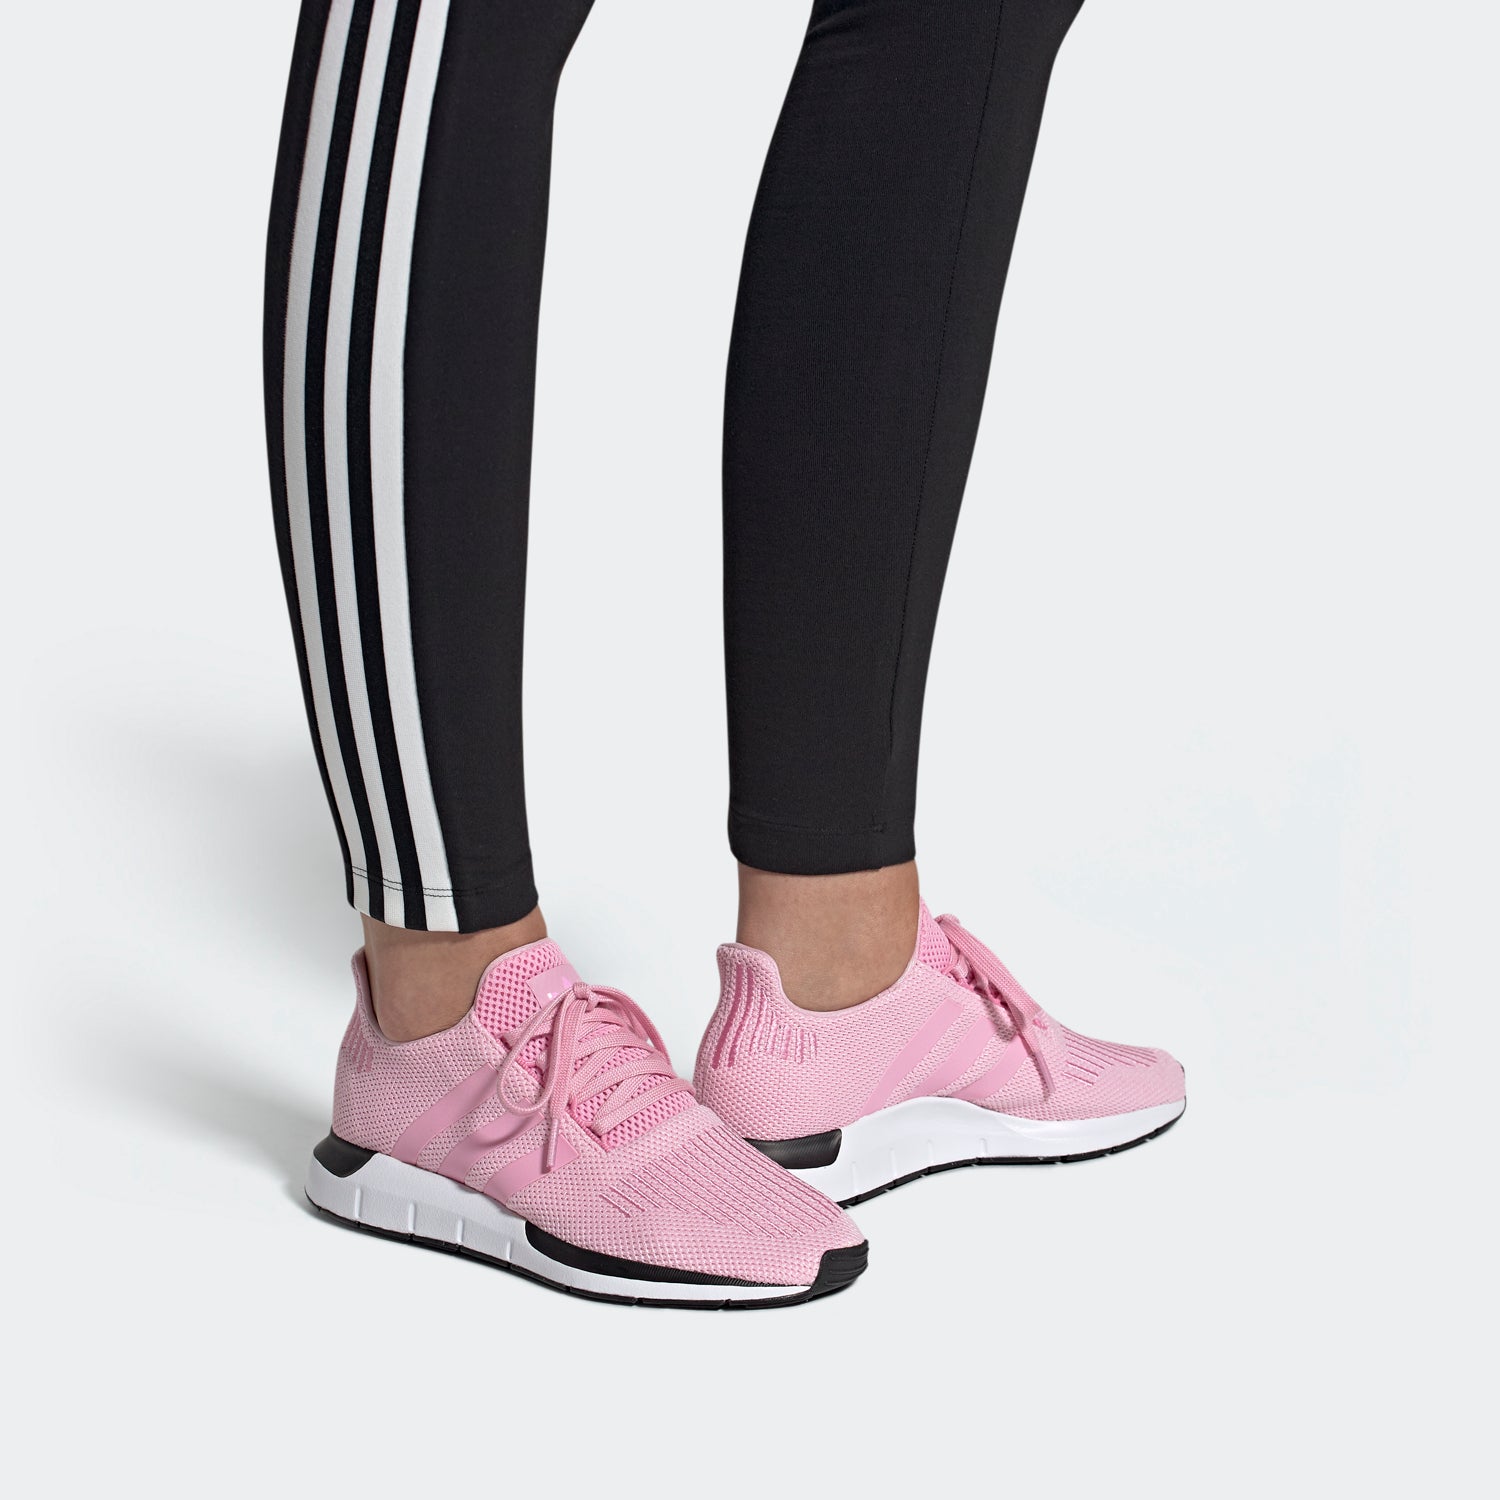 adidas women's swift run sneakers